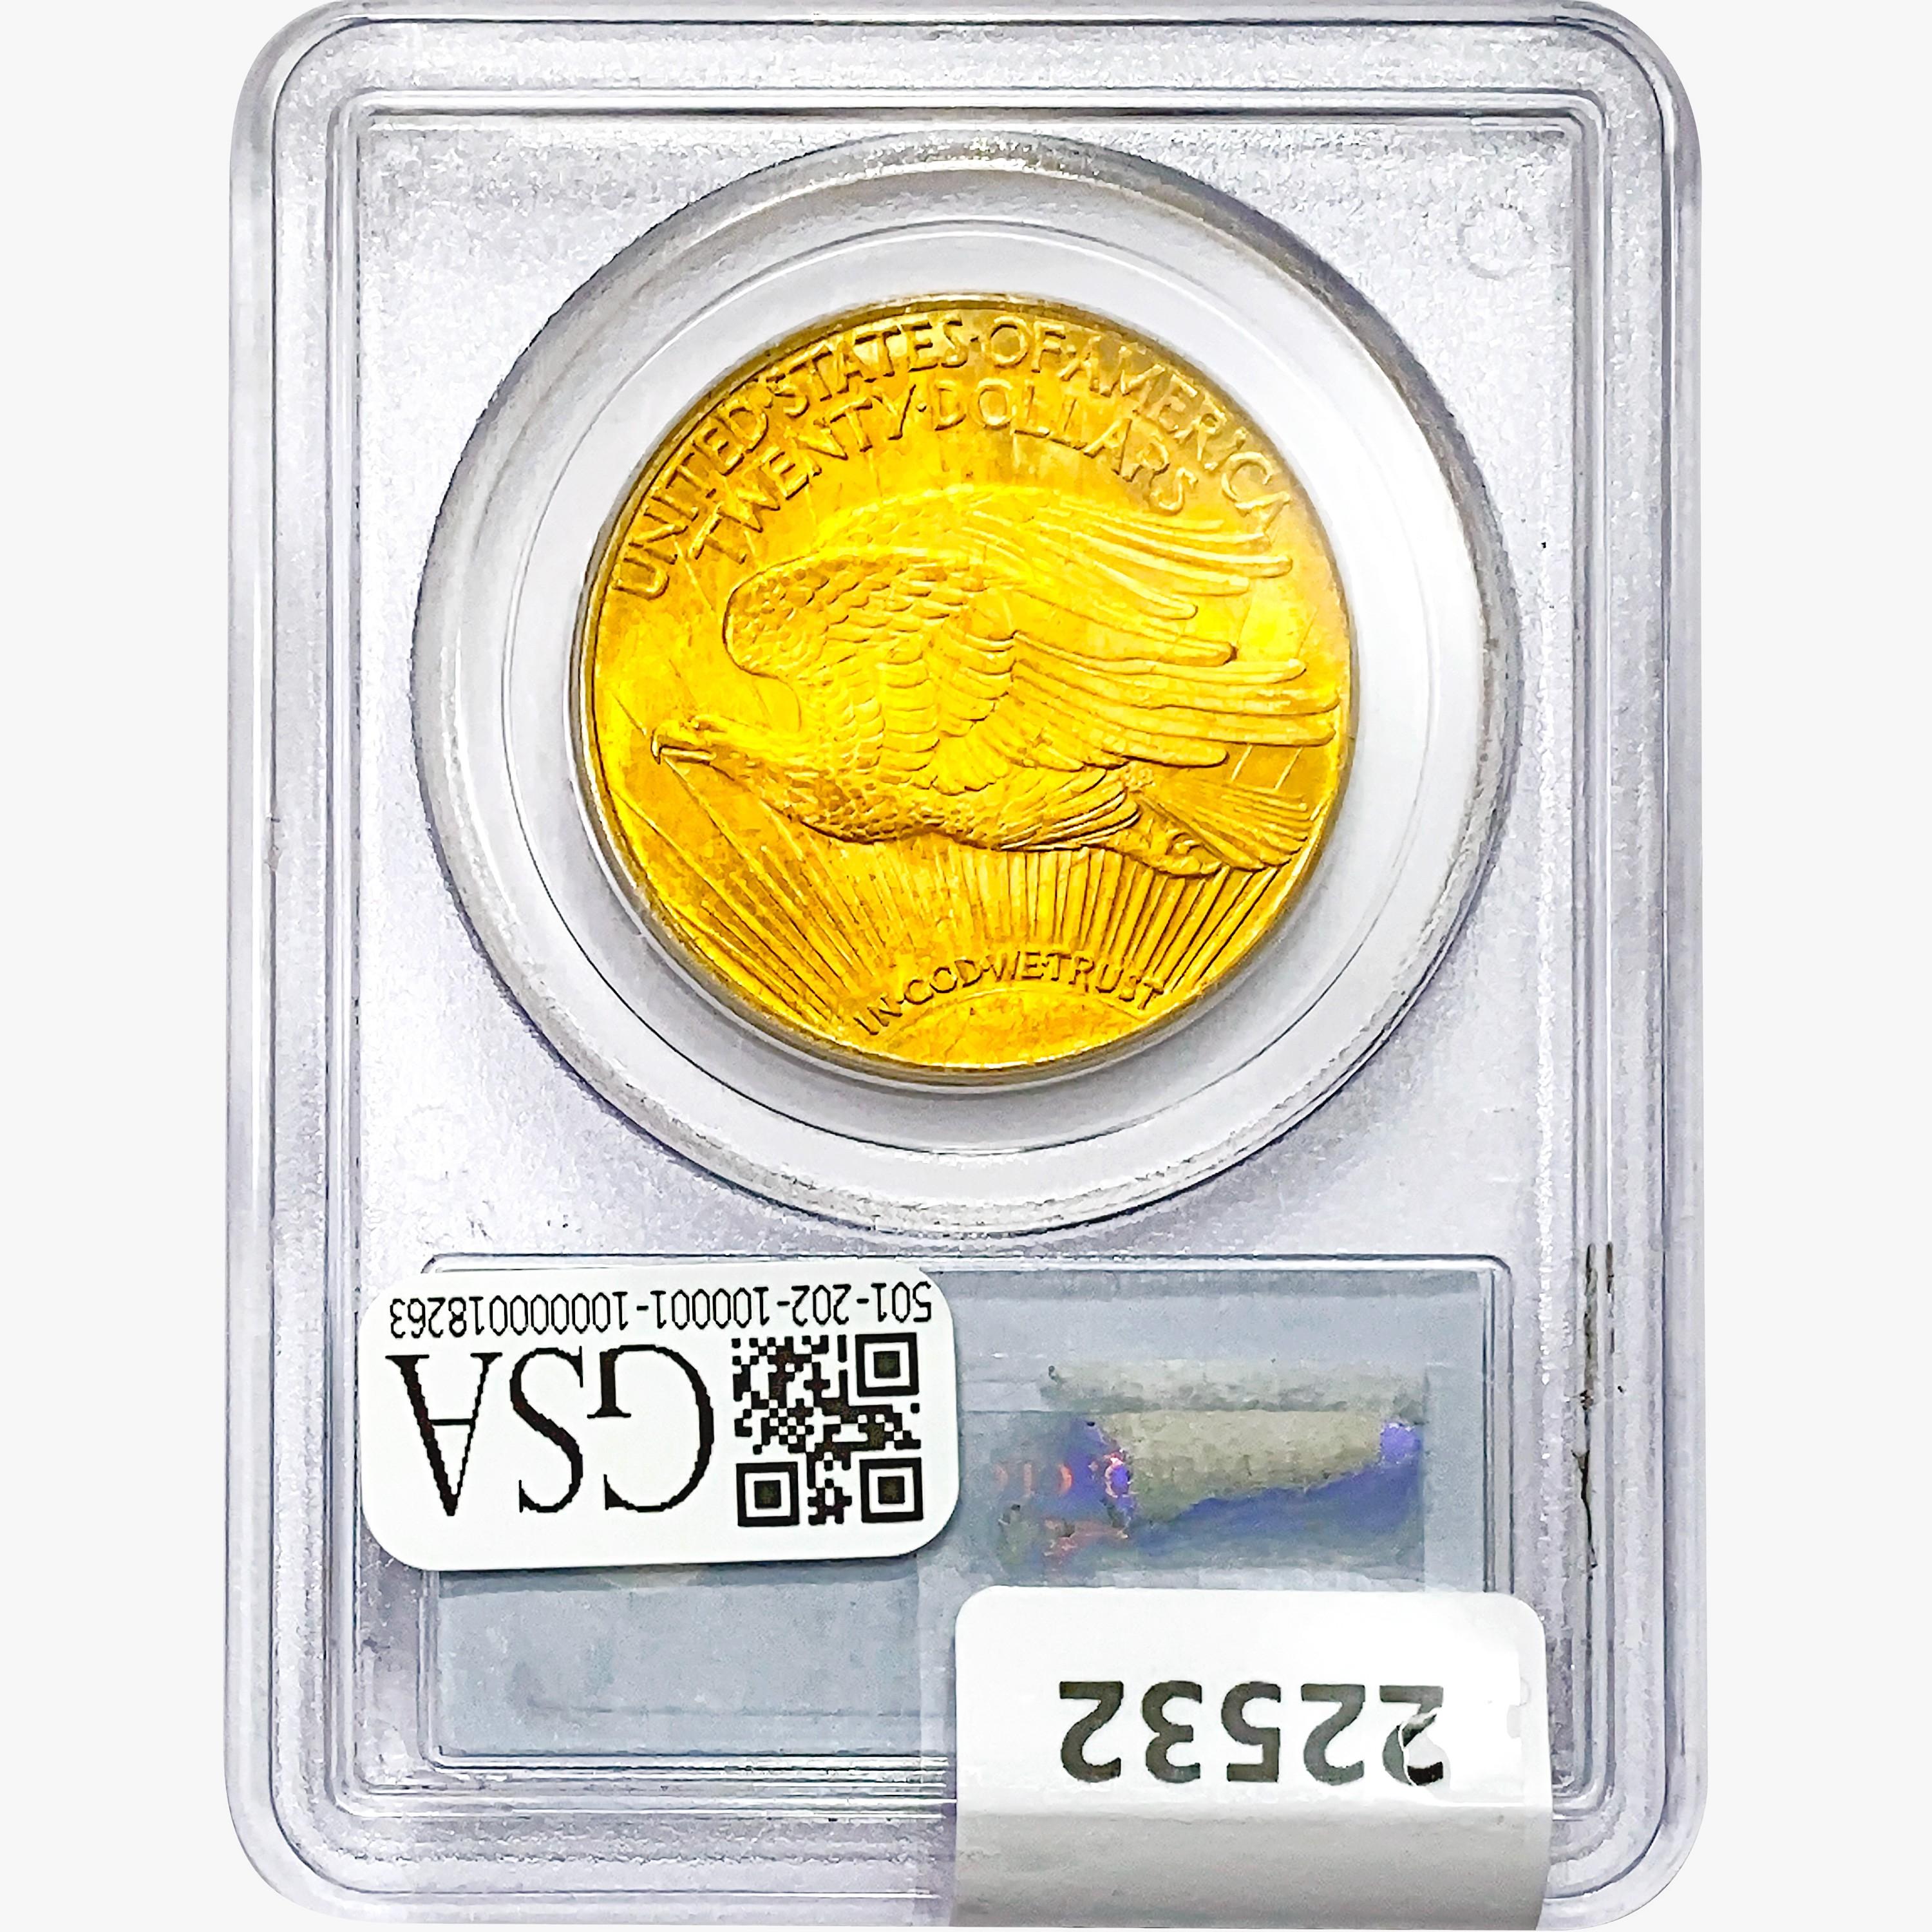 1925 $20 Gold Double Eagle PCGS MS65